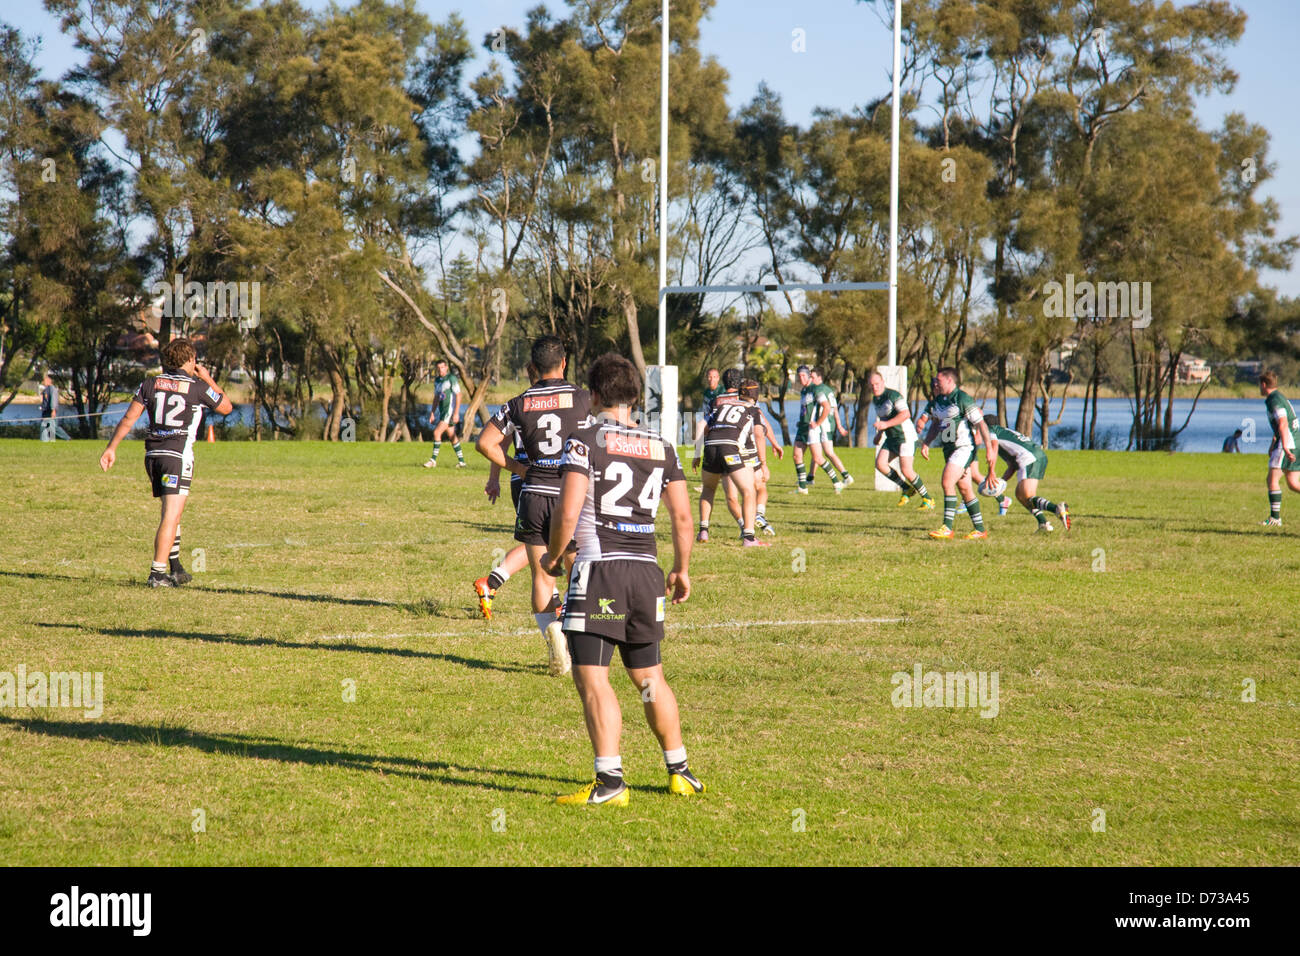 Junior league australian rugby league game,Sydney,Australia Stock Photo